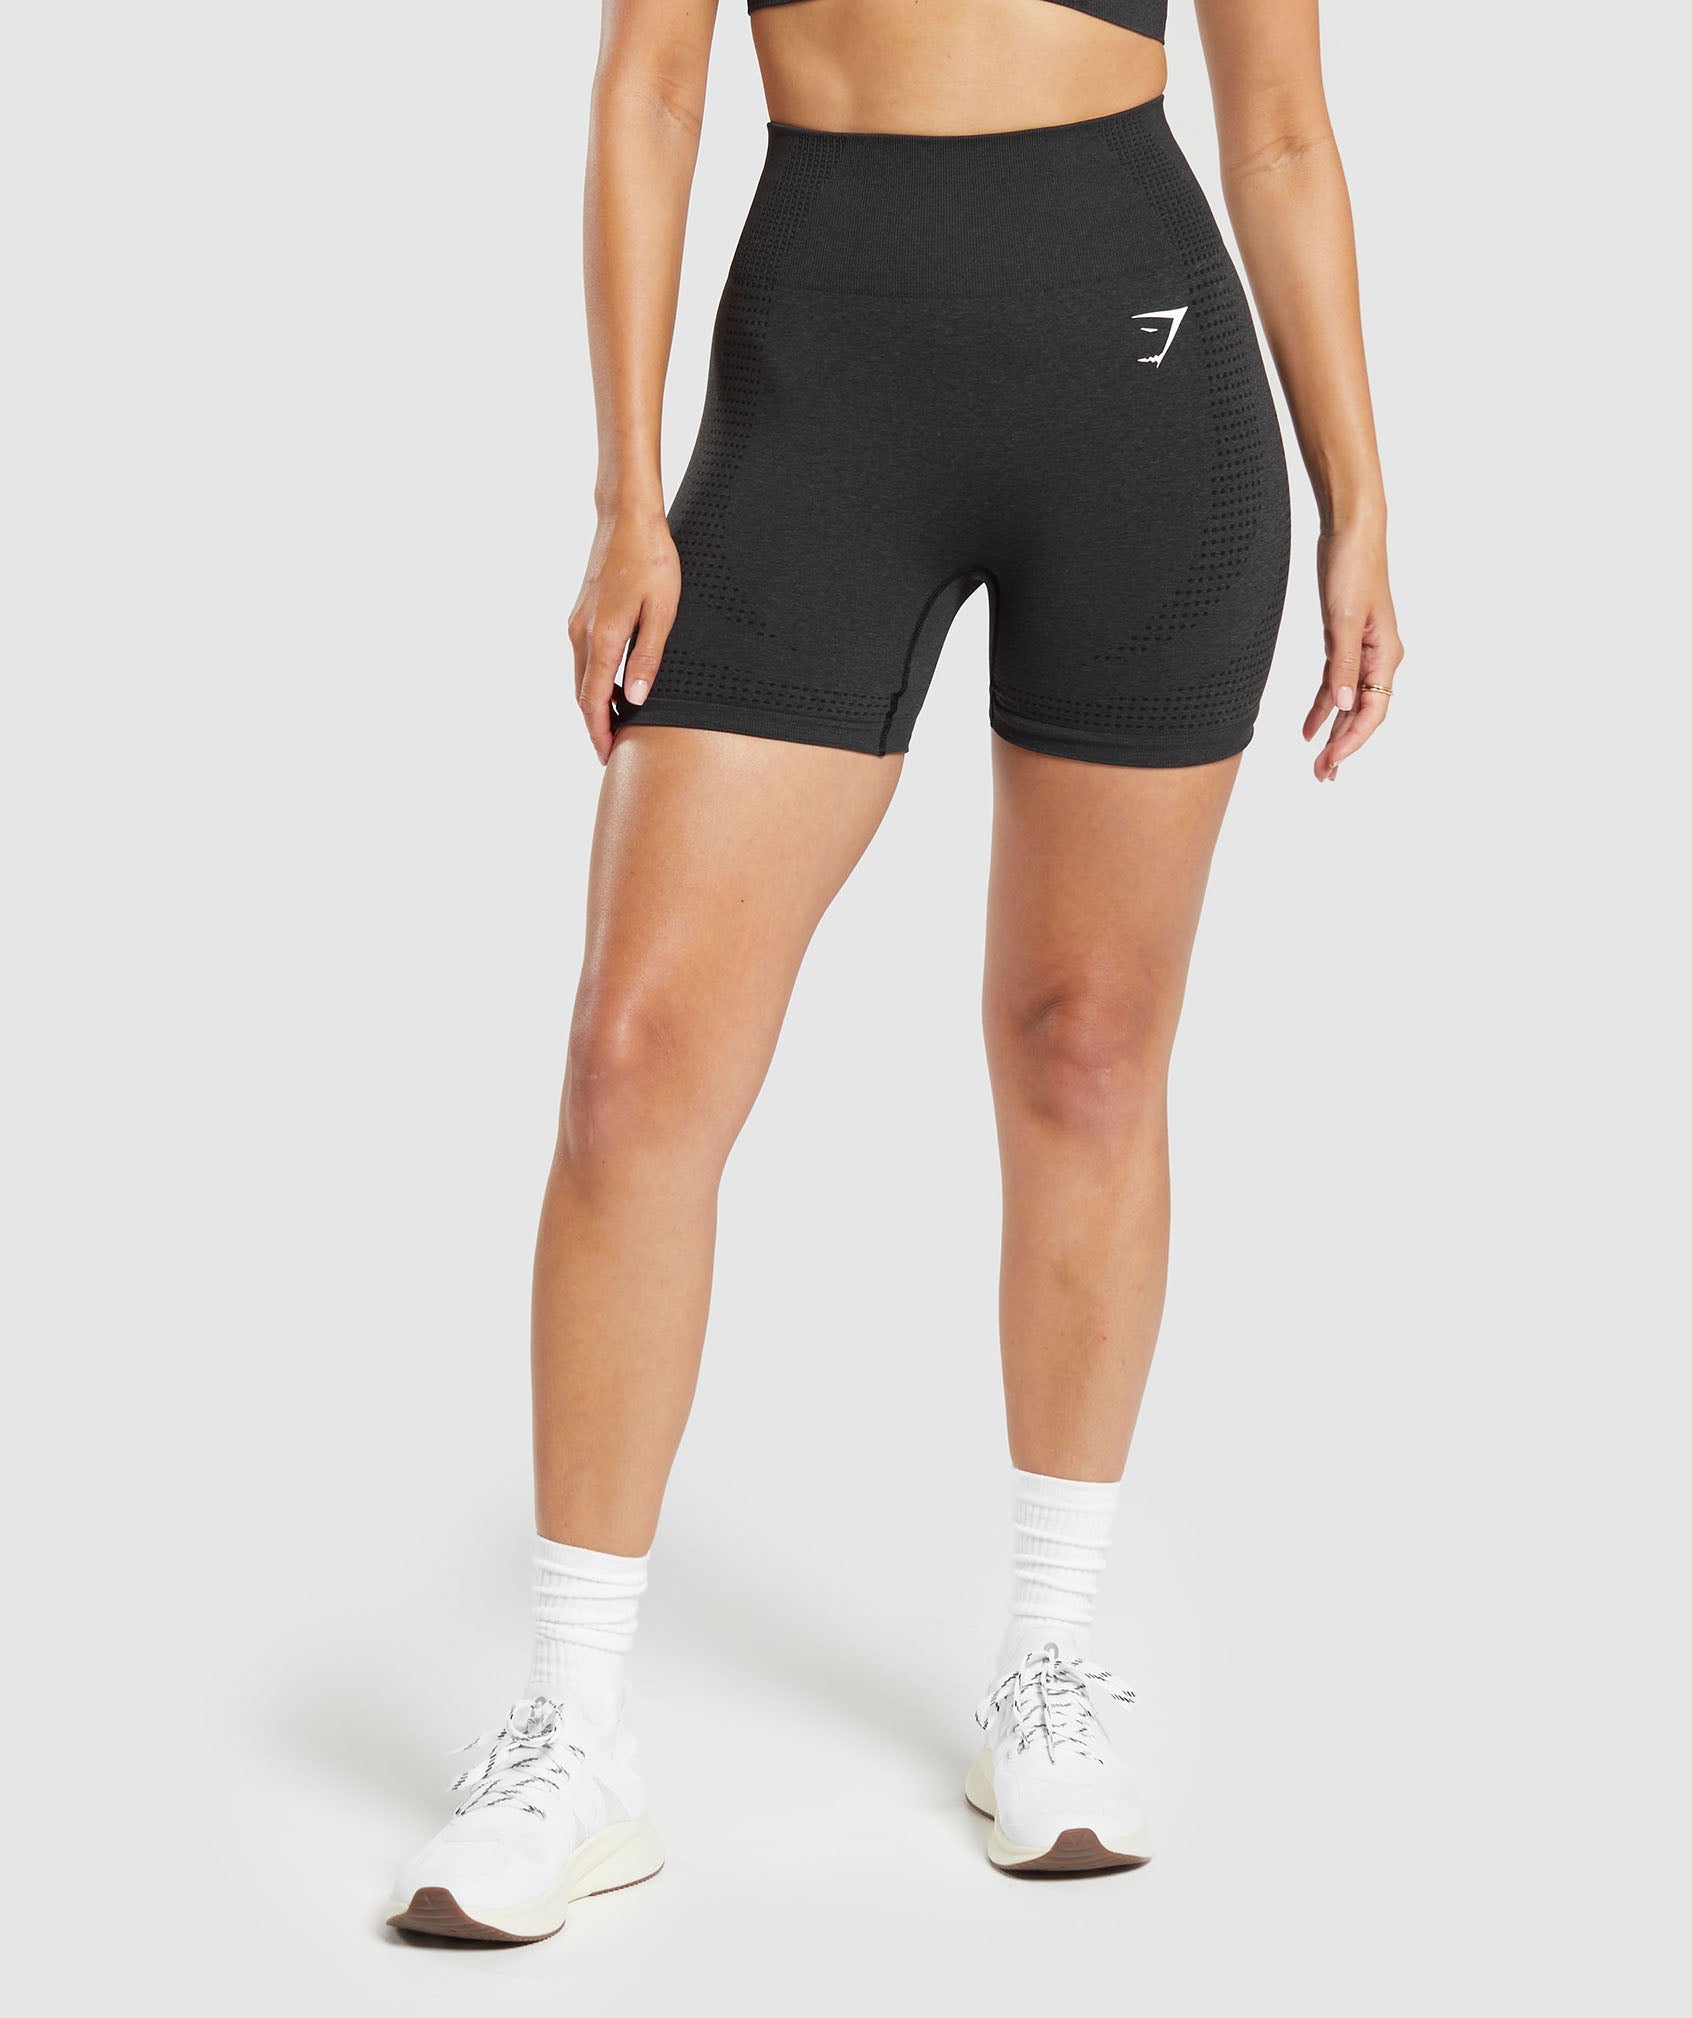 Women Short Leggings High Waist Biker Shorts Tummy Control Workout Shorts  with Pockets Tight Running Shorts Women Shark Short Pants for Daily Fitness